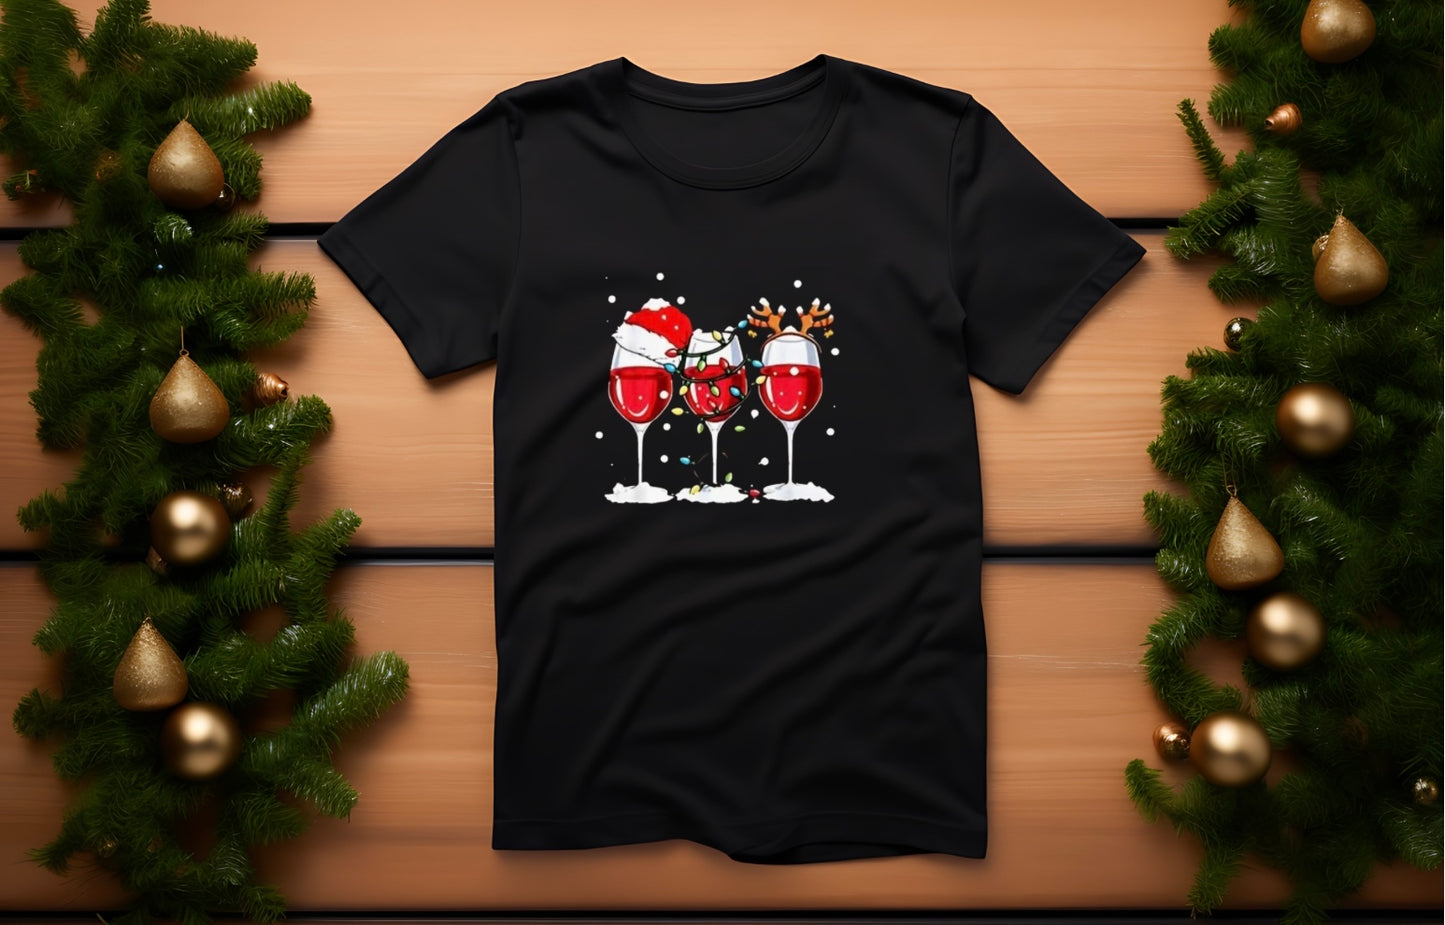 Winter Holiday T-Shirts